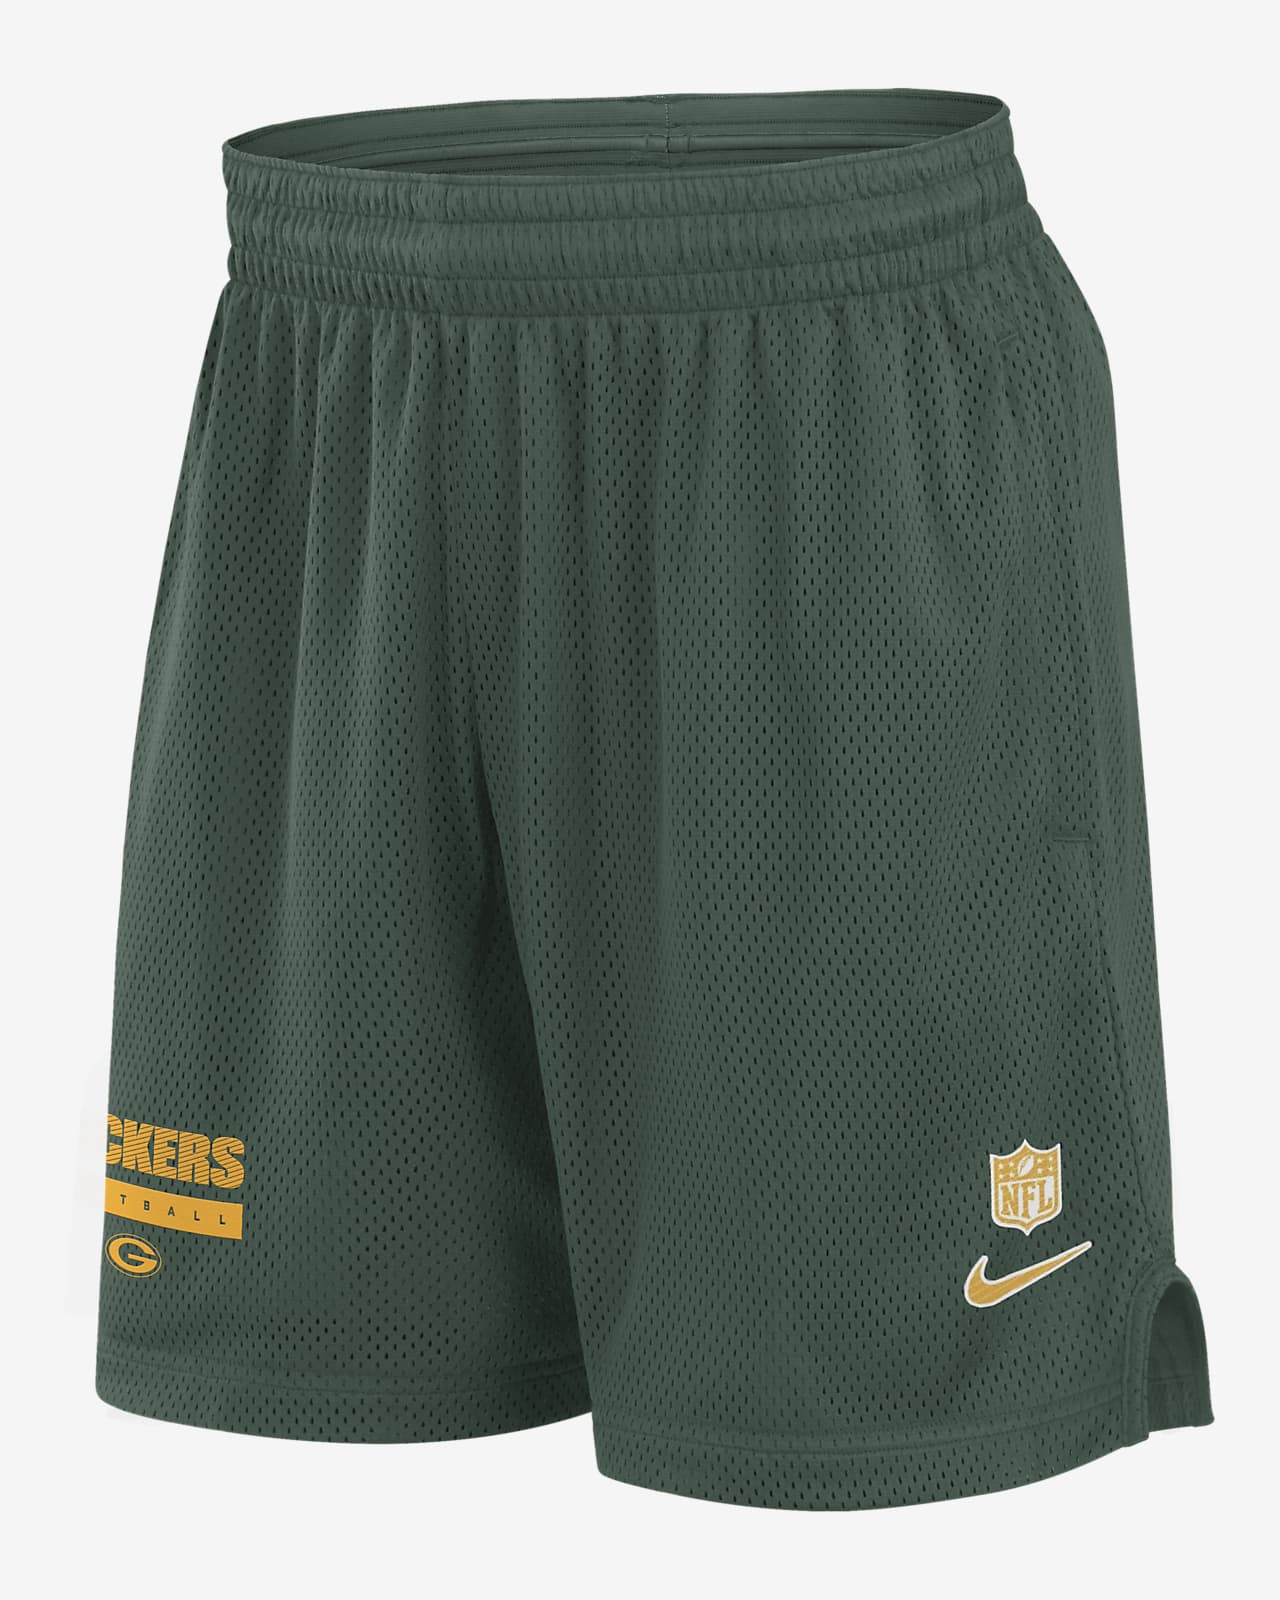 Shorts Nike Dri-FIT de la NFL para hombre Green Bay Packers Sideline